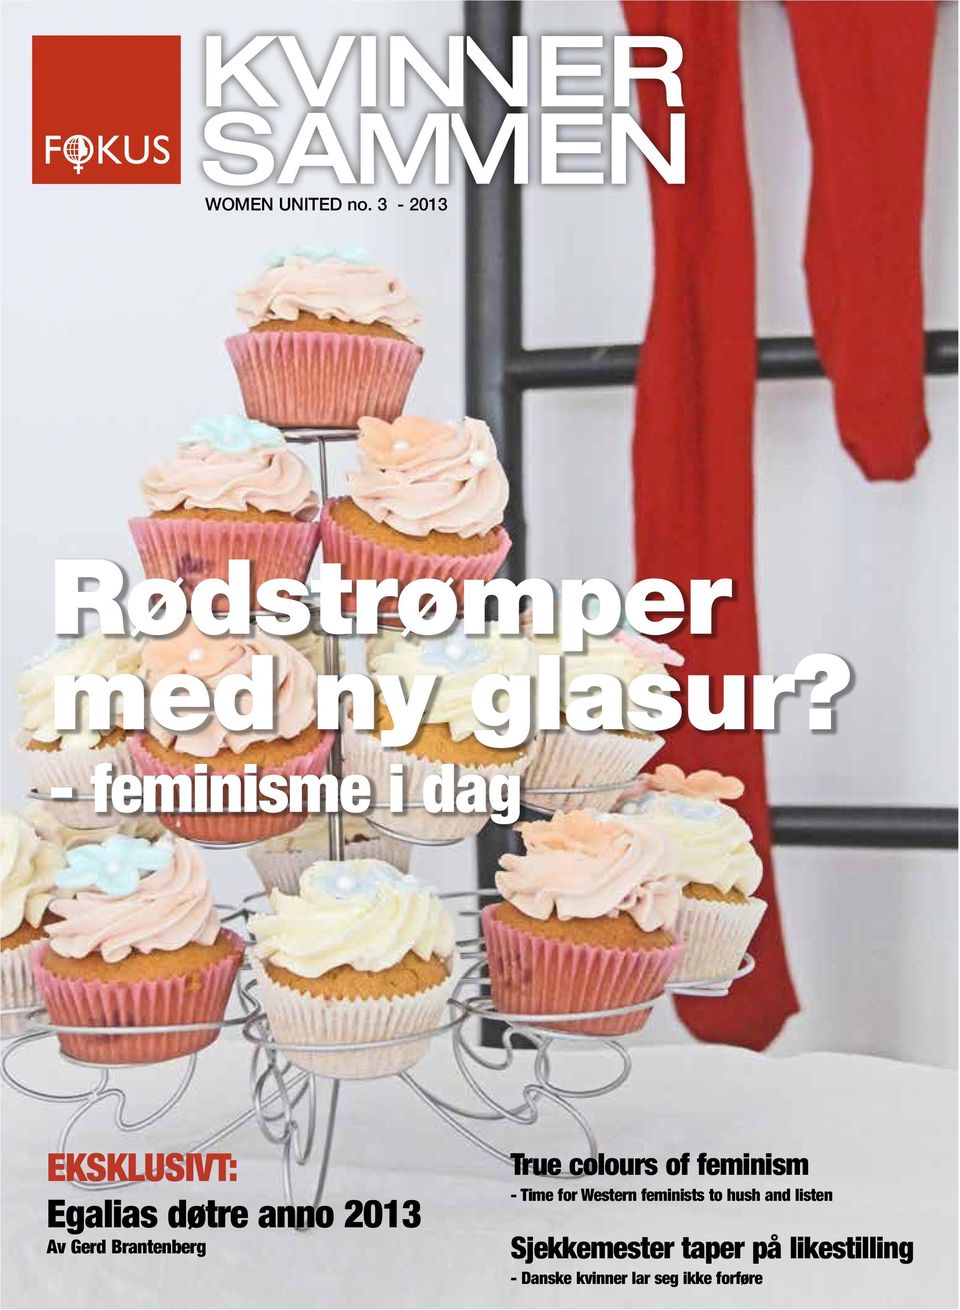 Brantenberg True colours of feminism - Time for Western feminists